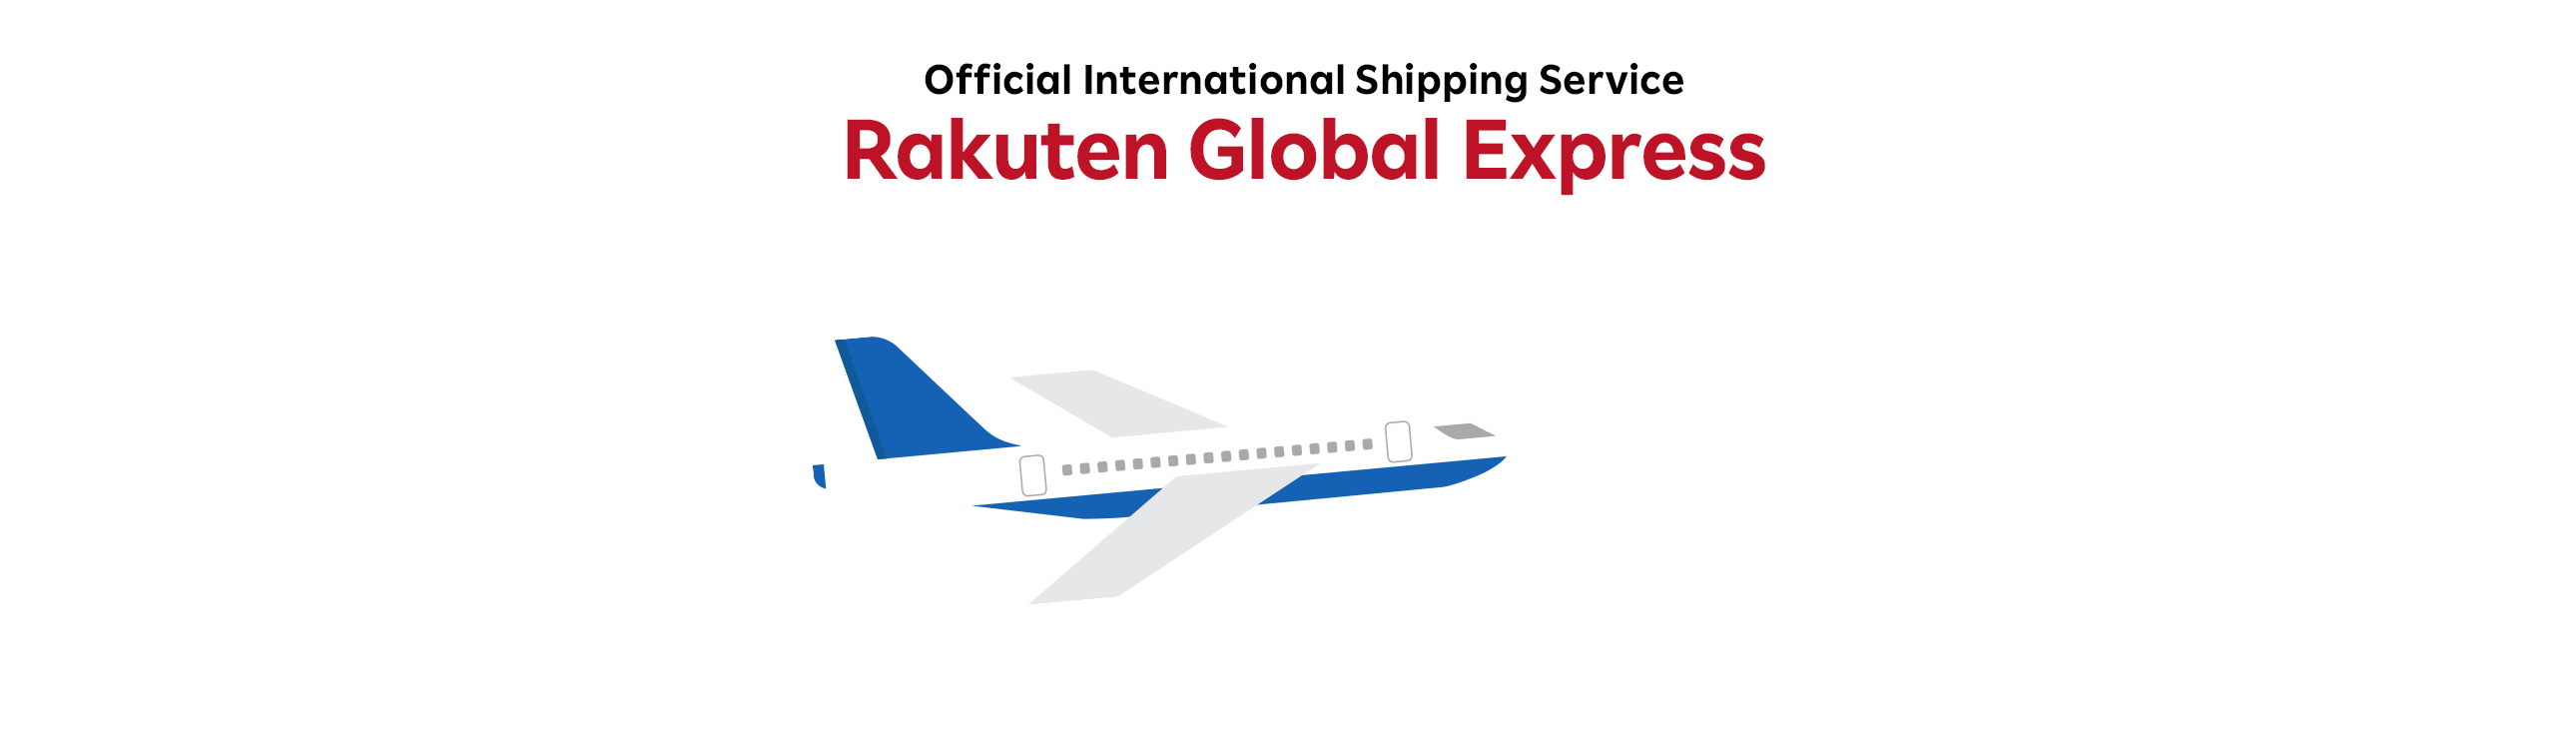 Official International Shipping Service Rakuten Global Express Conbine orders. Save on Shipping.